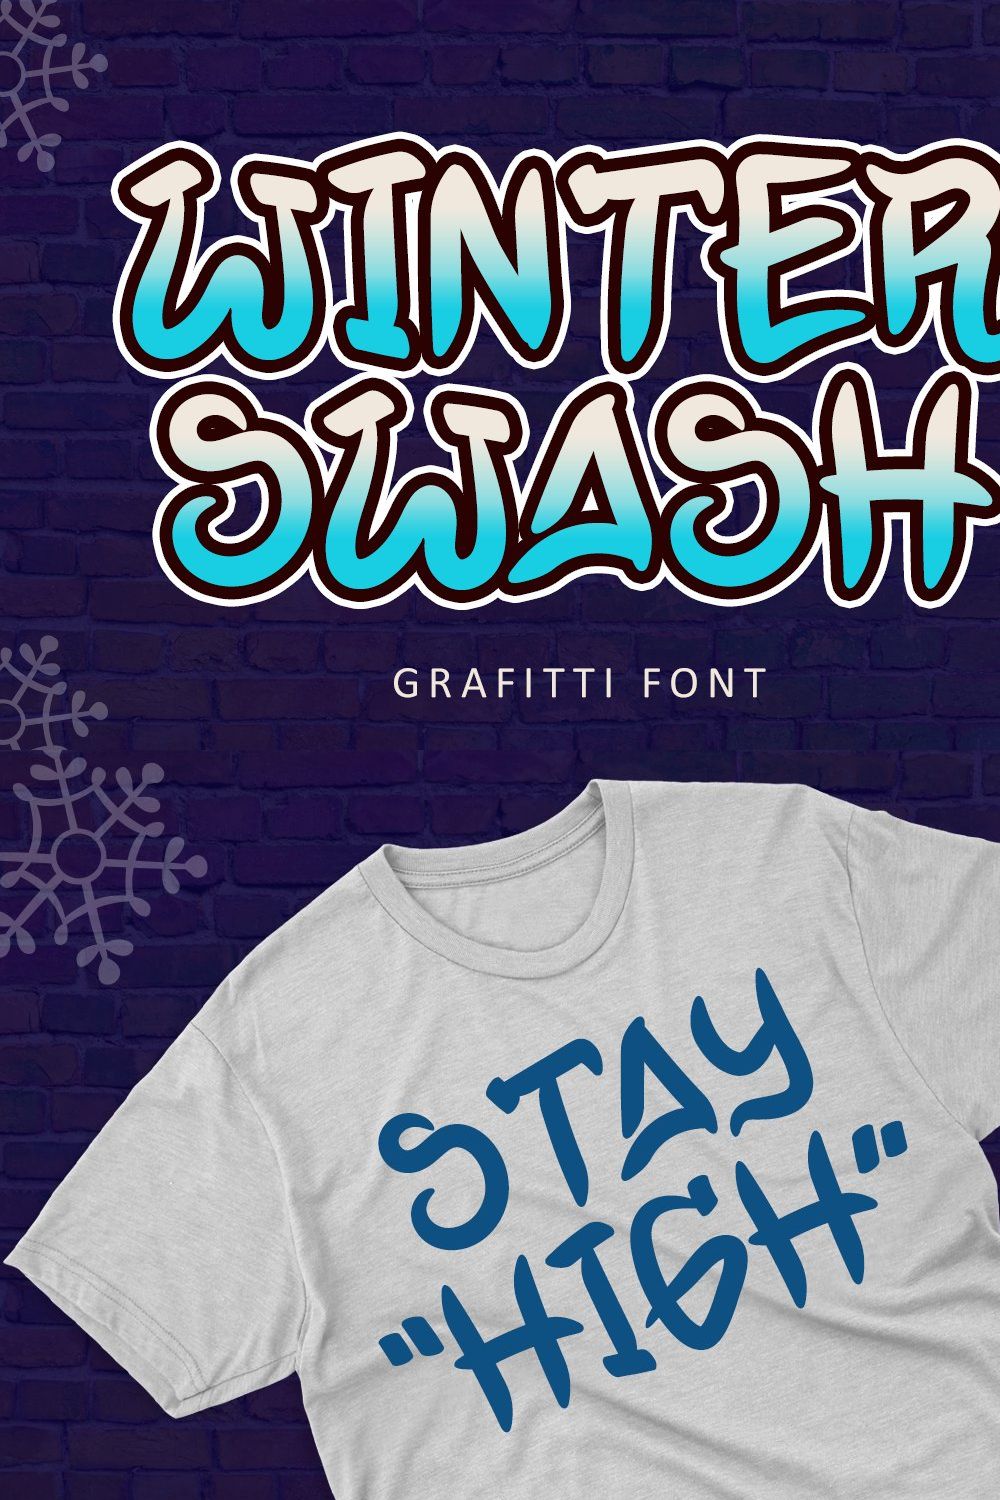 Winter Swash - Graffiti Winter Font pinterest preview image.